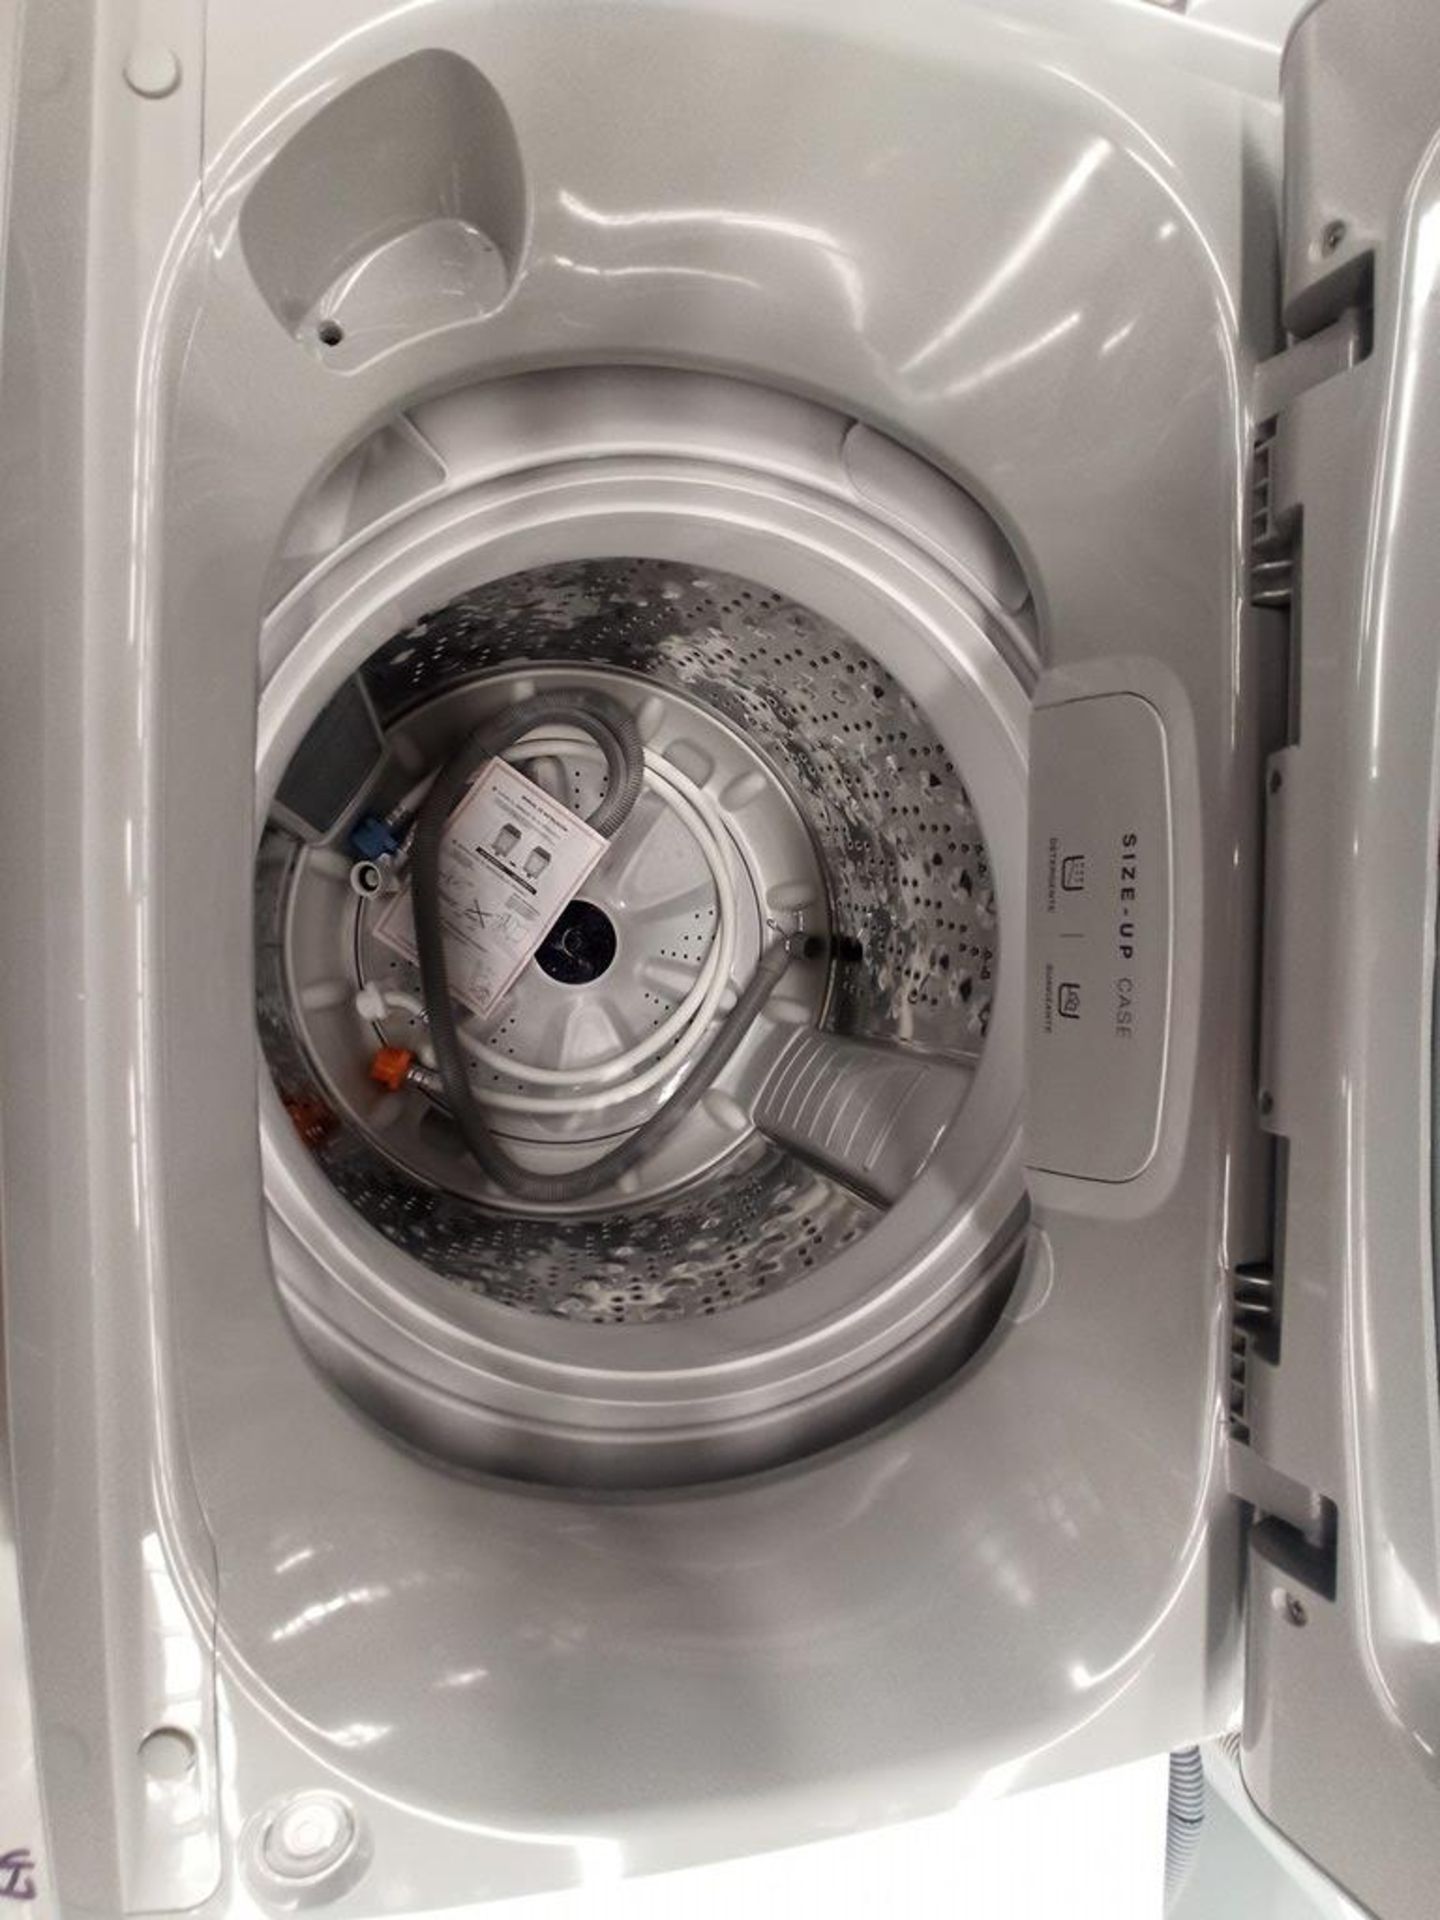 Lote de 2 Lavadoras contiene: 1 lavadora de 18 KG, Marca WINIA, Modelo DWFDG361AGG1, Serie 150174, - Image 4 of 10